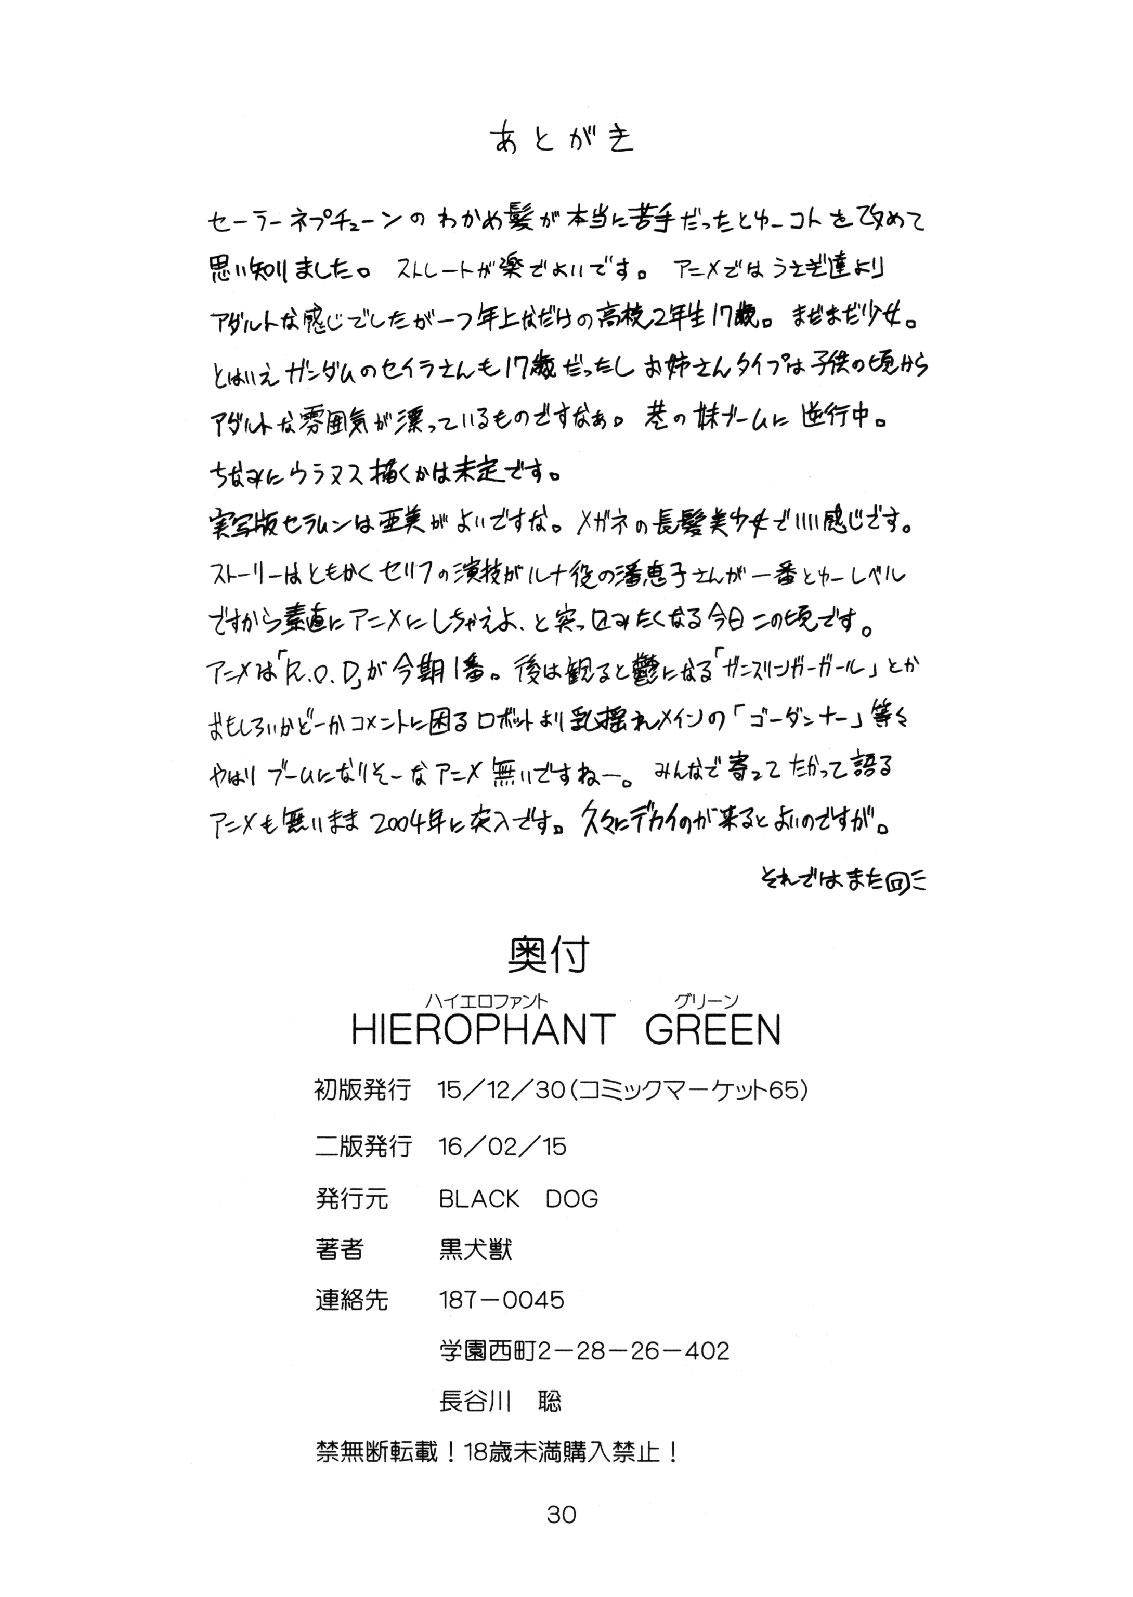  Hierophant Green - Sailor moon Vadia - Page 29